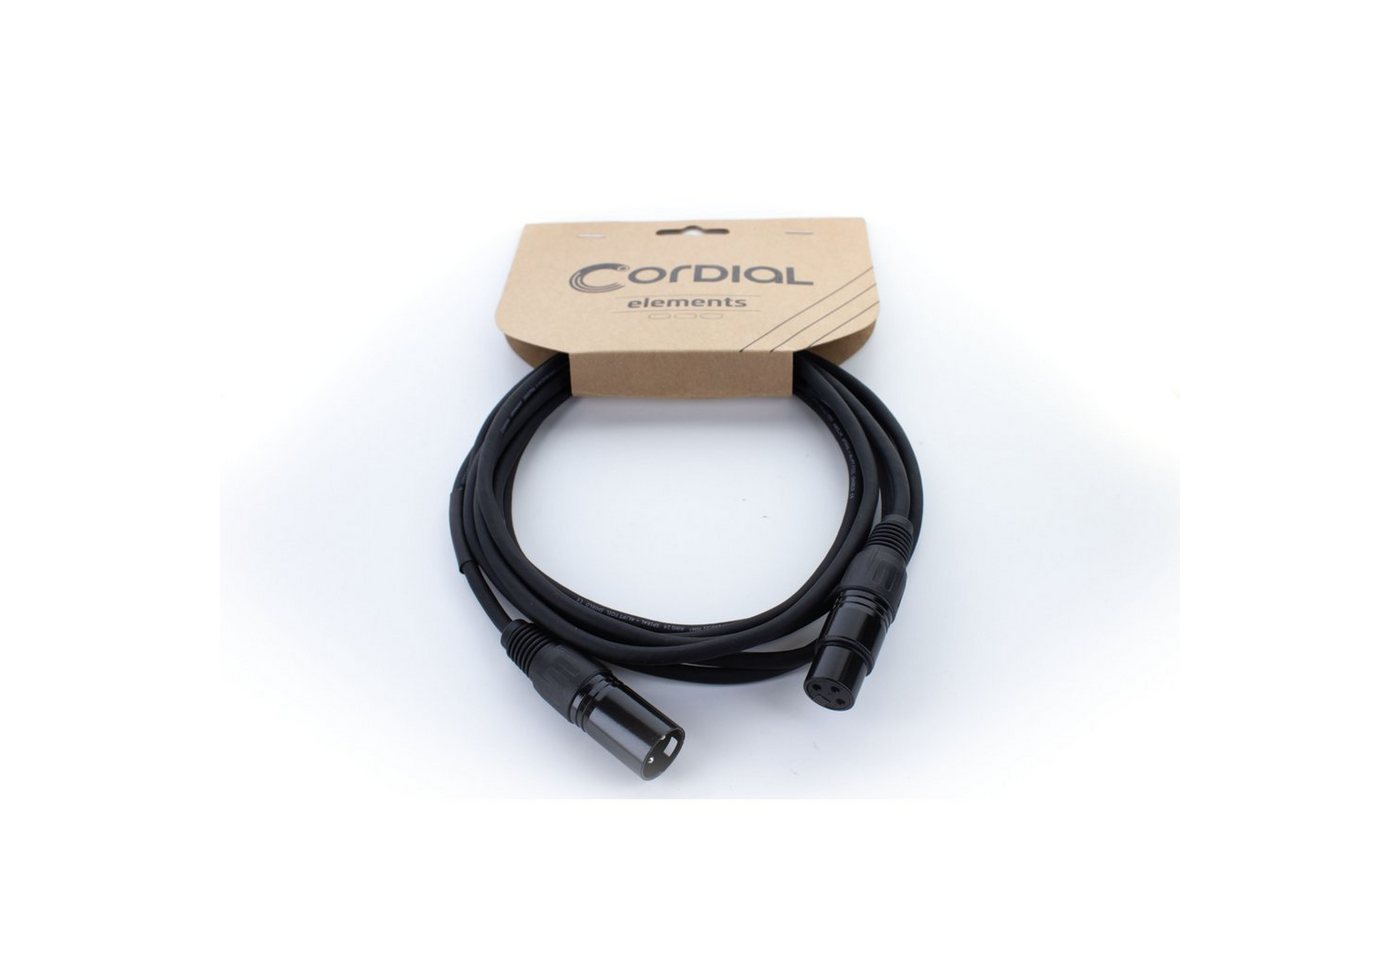 Cordial Lampen-Verbindungskabel, ED 2 FM DMX Kabel 2 m - Kabel von Cordial